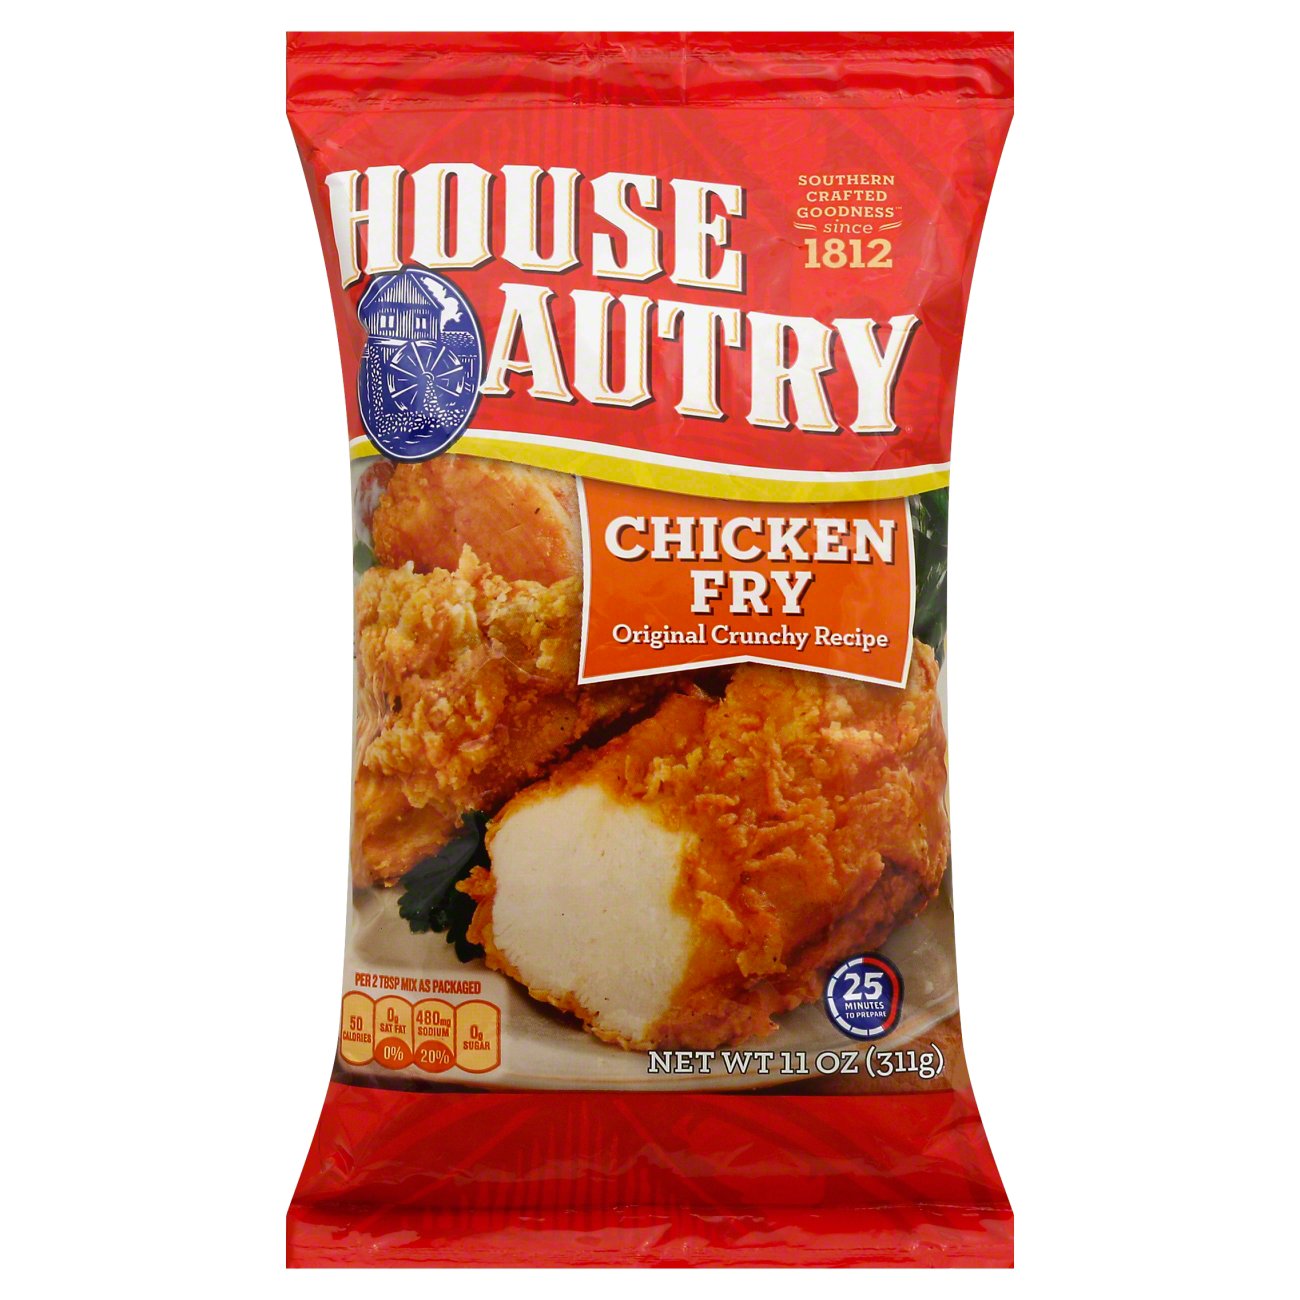 Louisiana Seasoned Crispy Chicken Fry Chicken Batter Mix - Shop Breading &  Crumbs at H-E-B